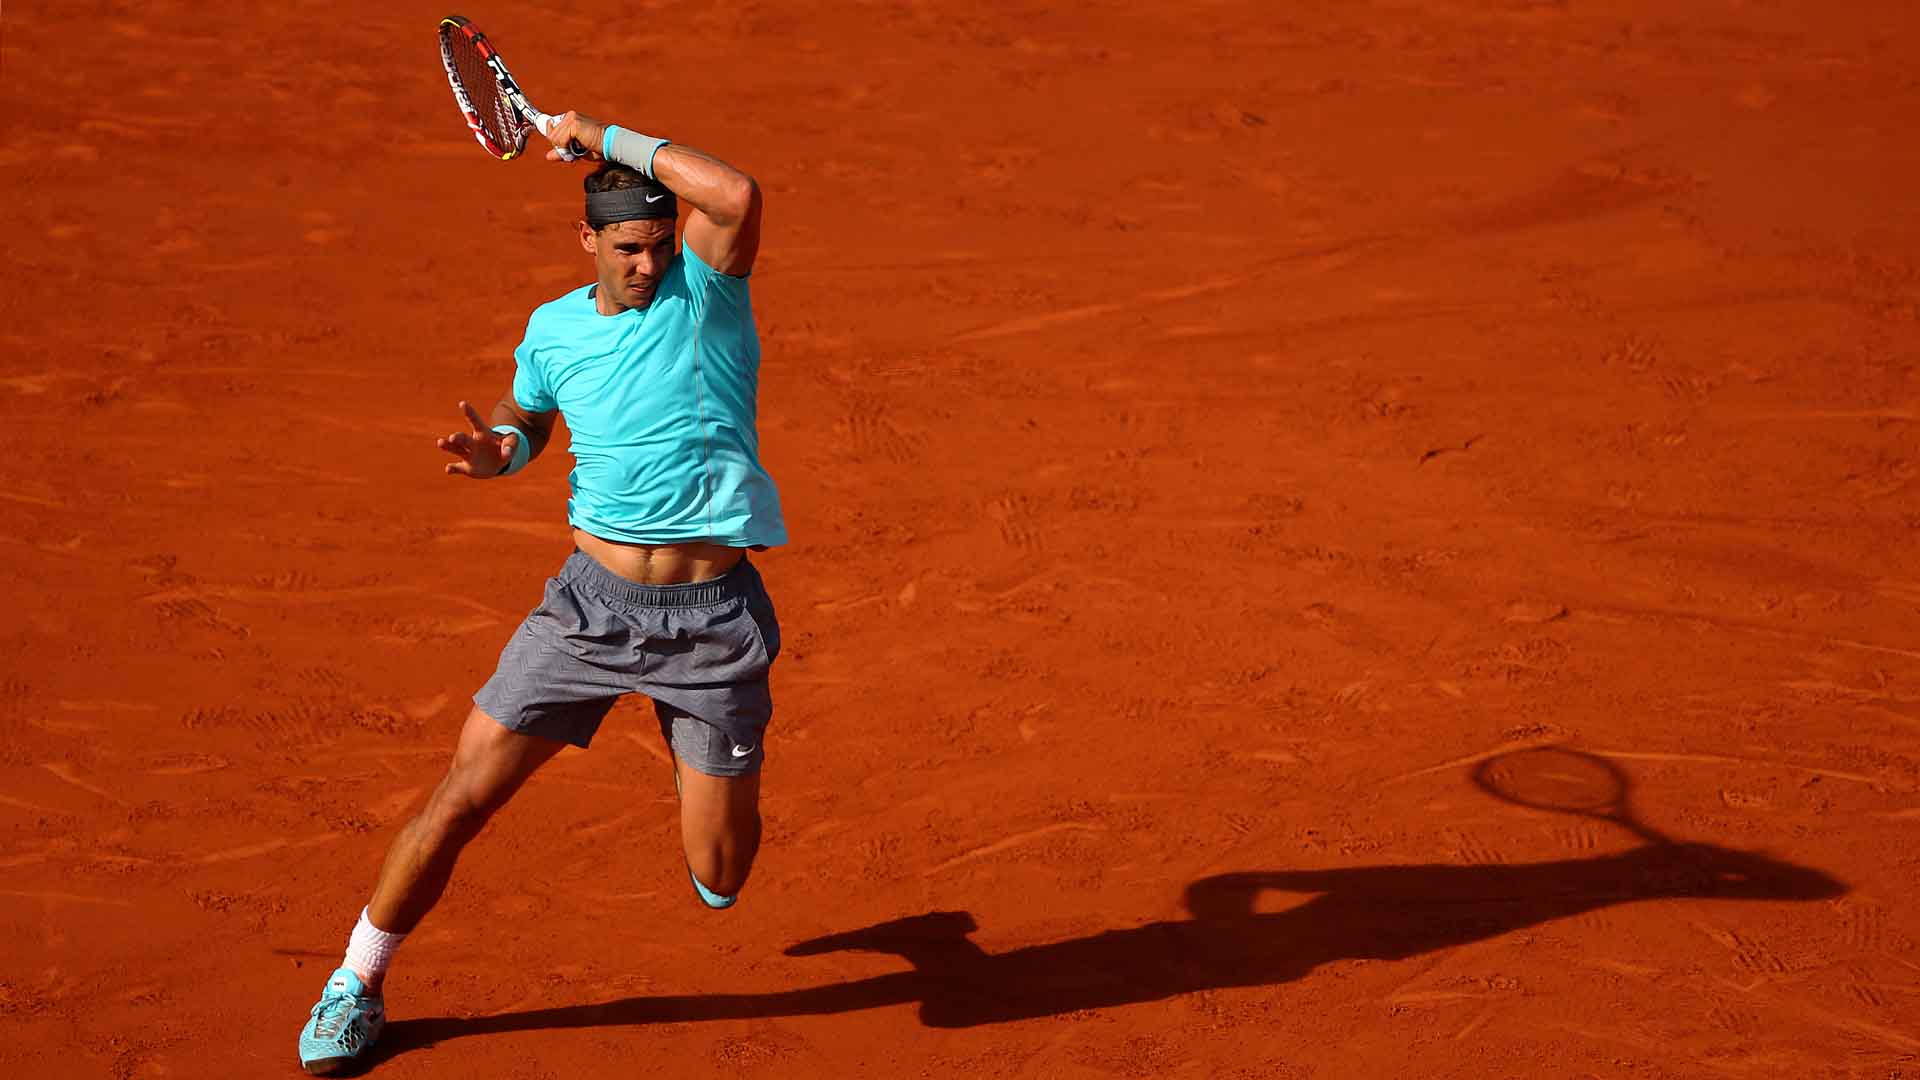 Rafael Nadal beats Novak Djokovic 3-6, 7-5, 6-2, 6-4 to win his ninth Roland Garros crown and tie Pete Sampras’s mark of 14 Grand Slam titles.